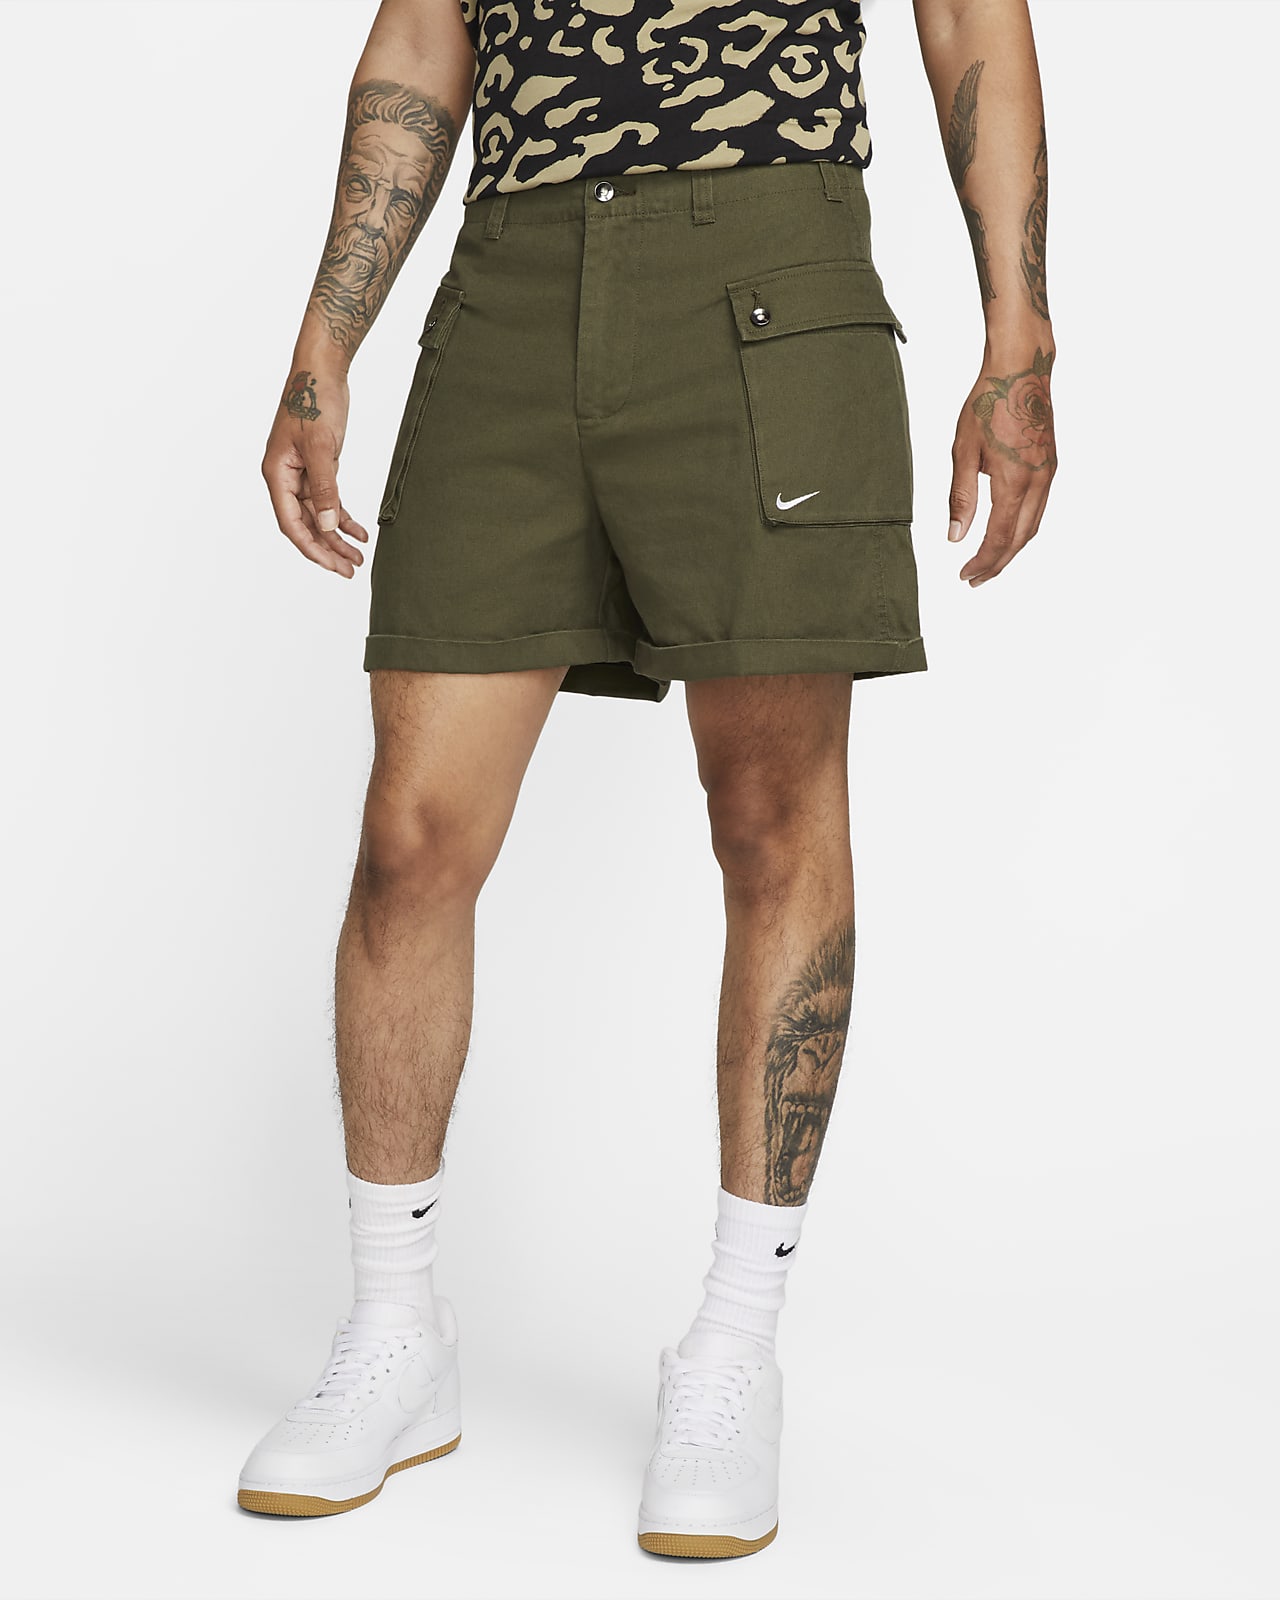 Men's Brown Shorts, Explore our New Arrivals